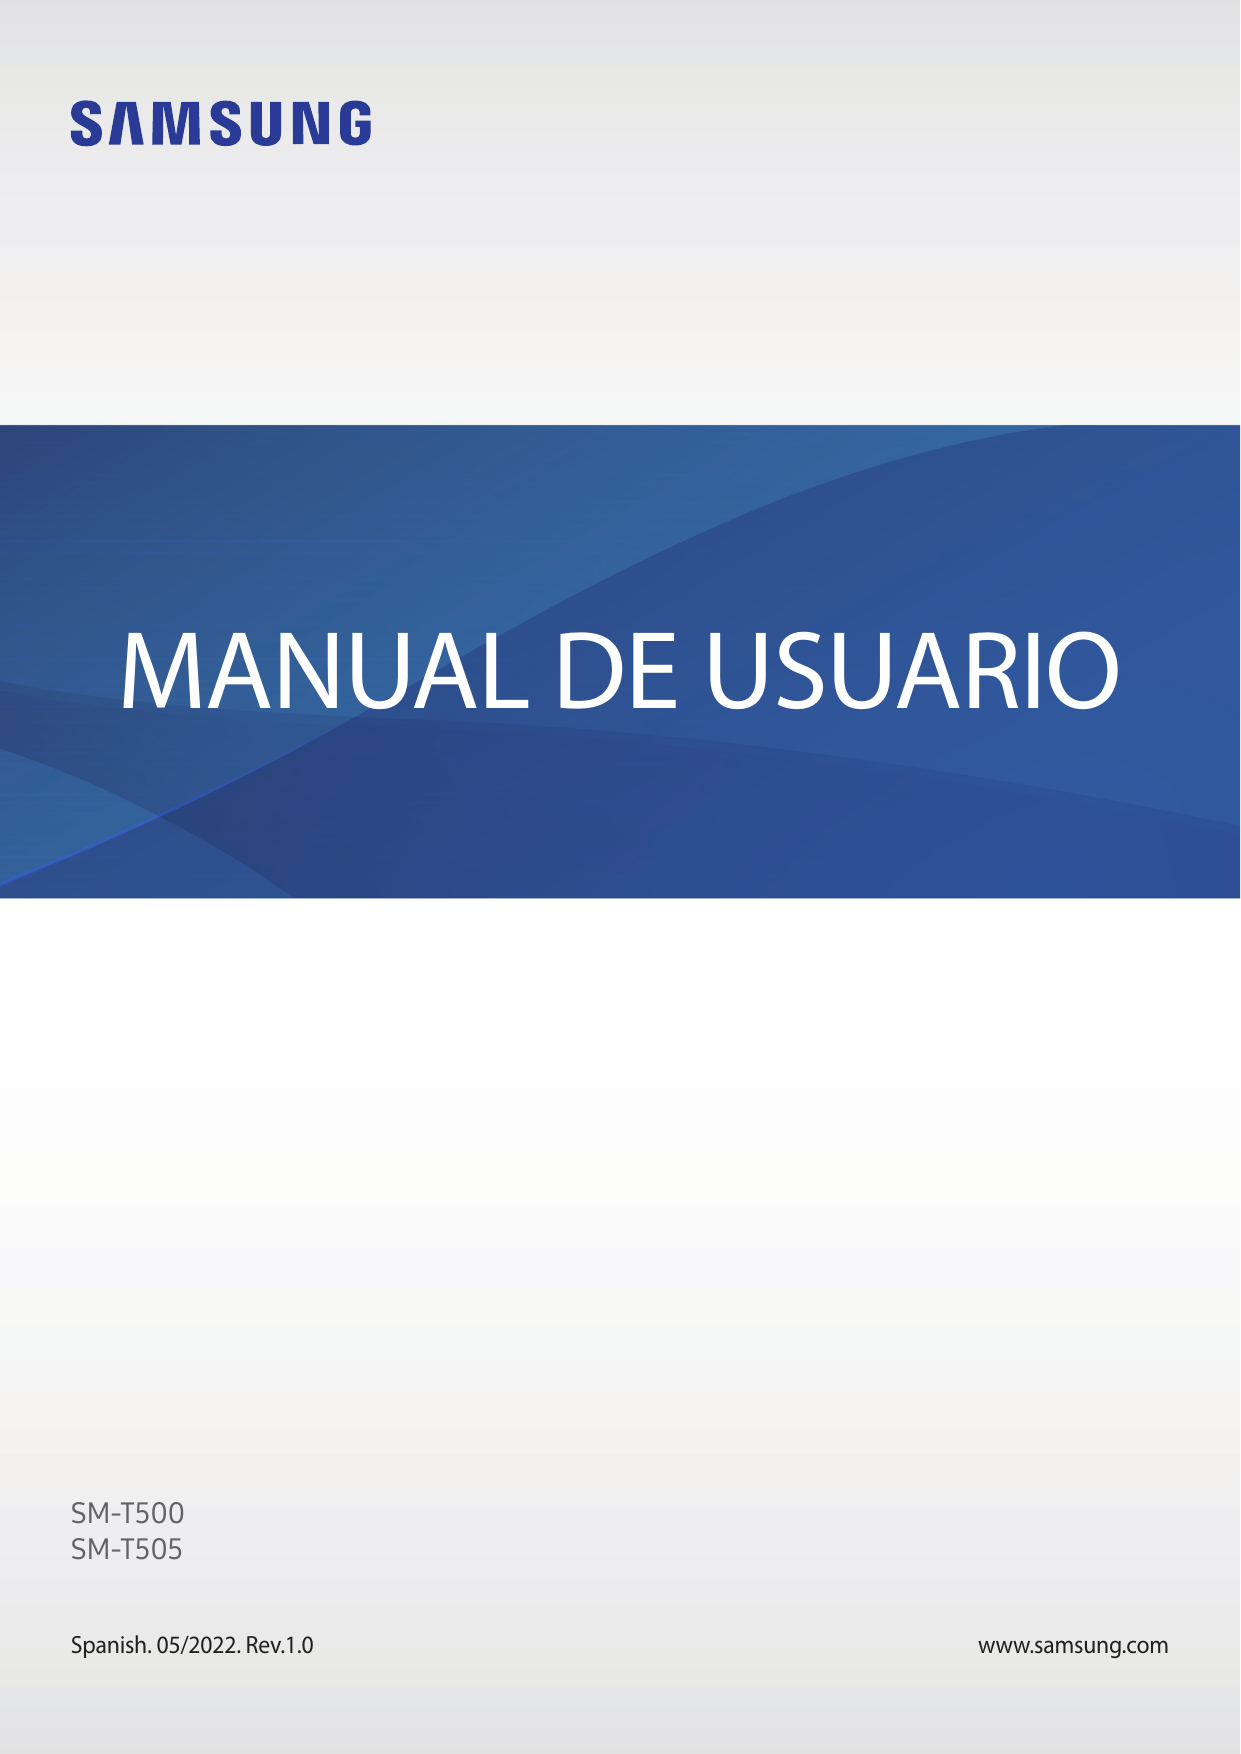 MANUAL DE USUARIOSM-T500SM-T505Spanish. 05/2022. Rev.1.0www.samsung.com